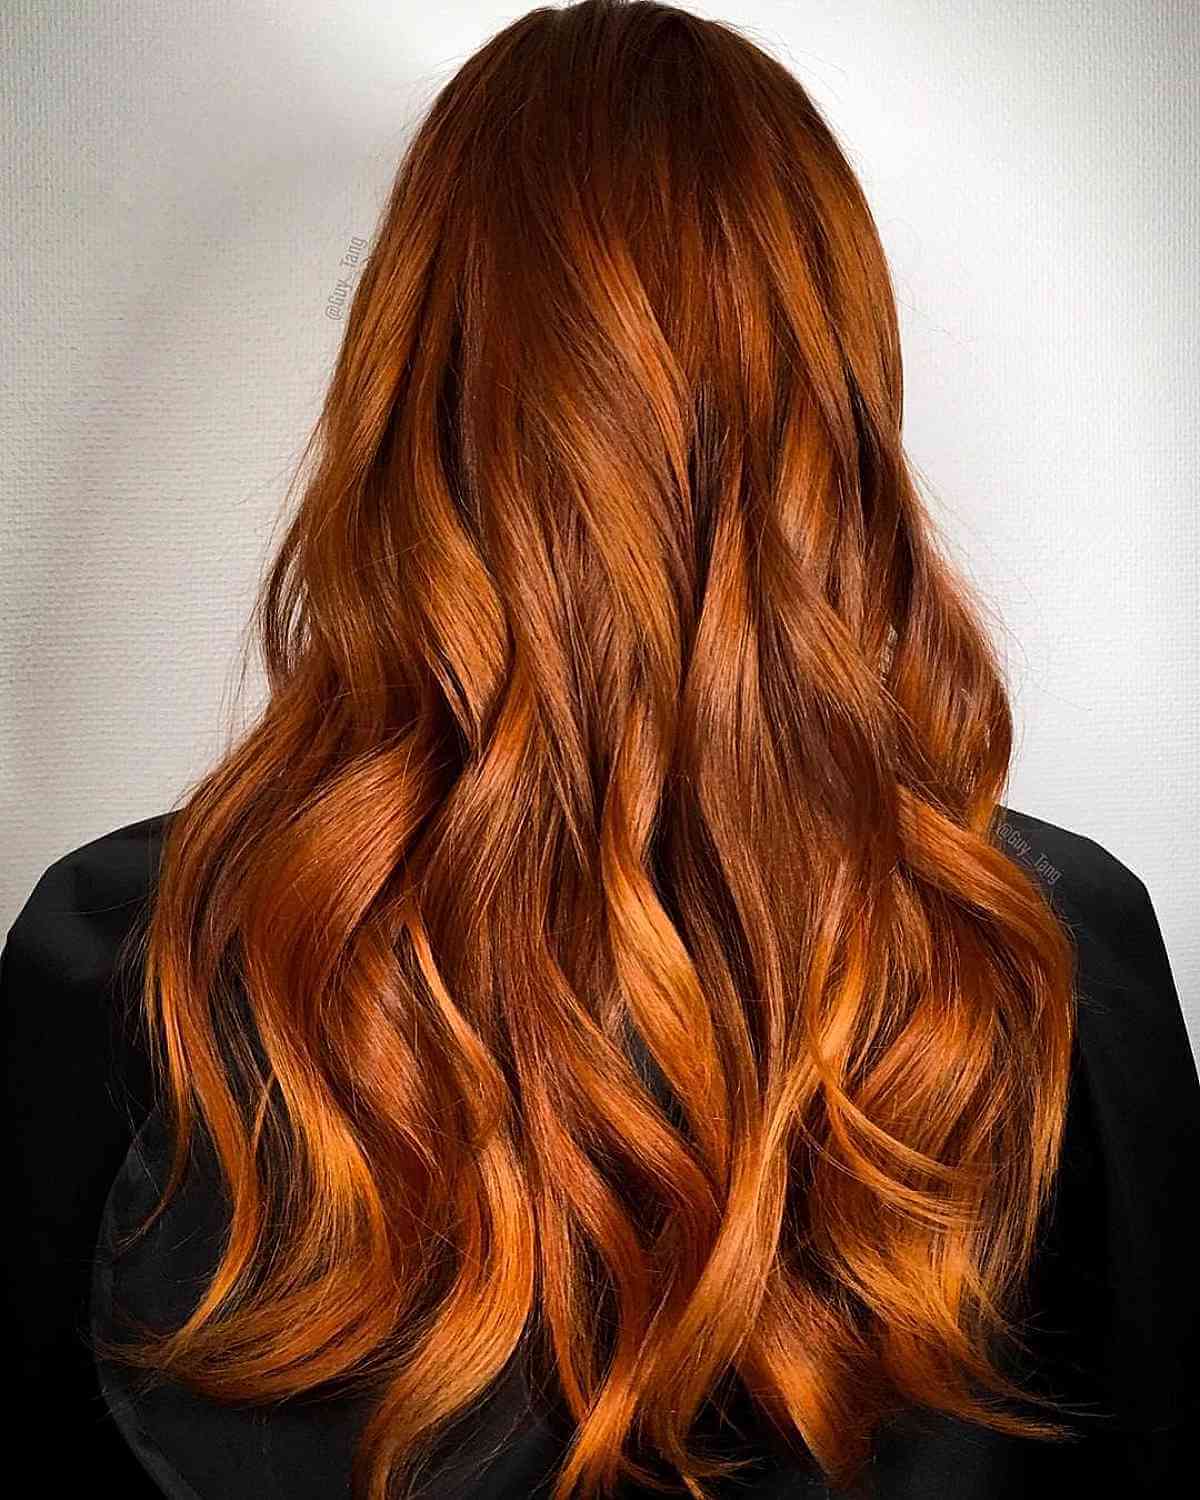 Rich and Glossy Long Reddish-Orange Hair